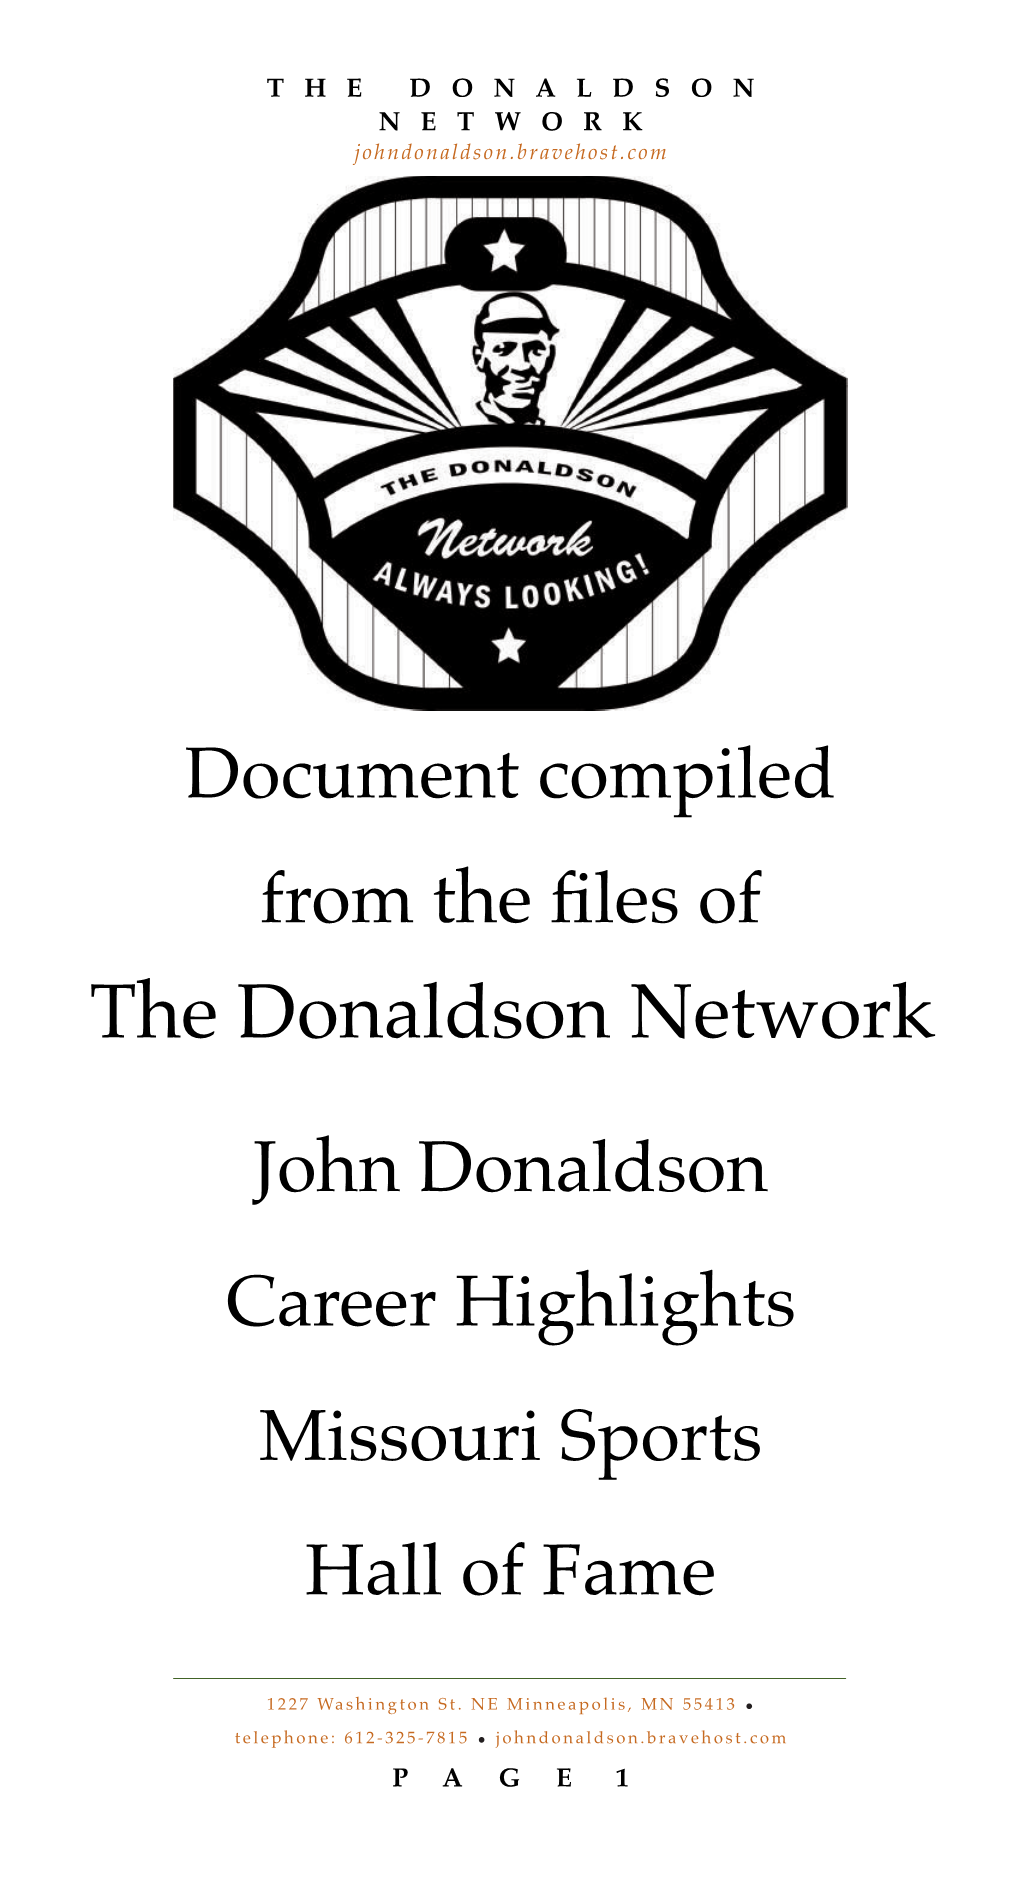 The Donaldson Network